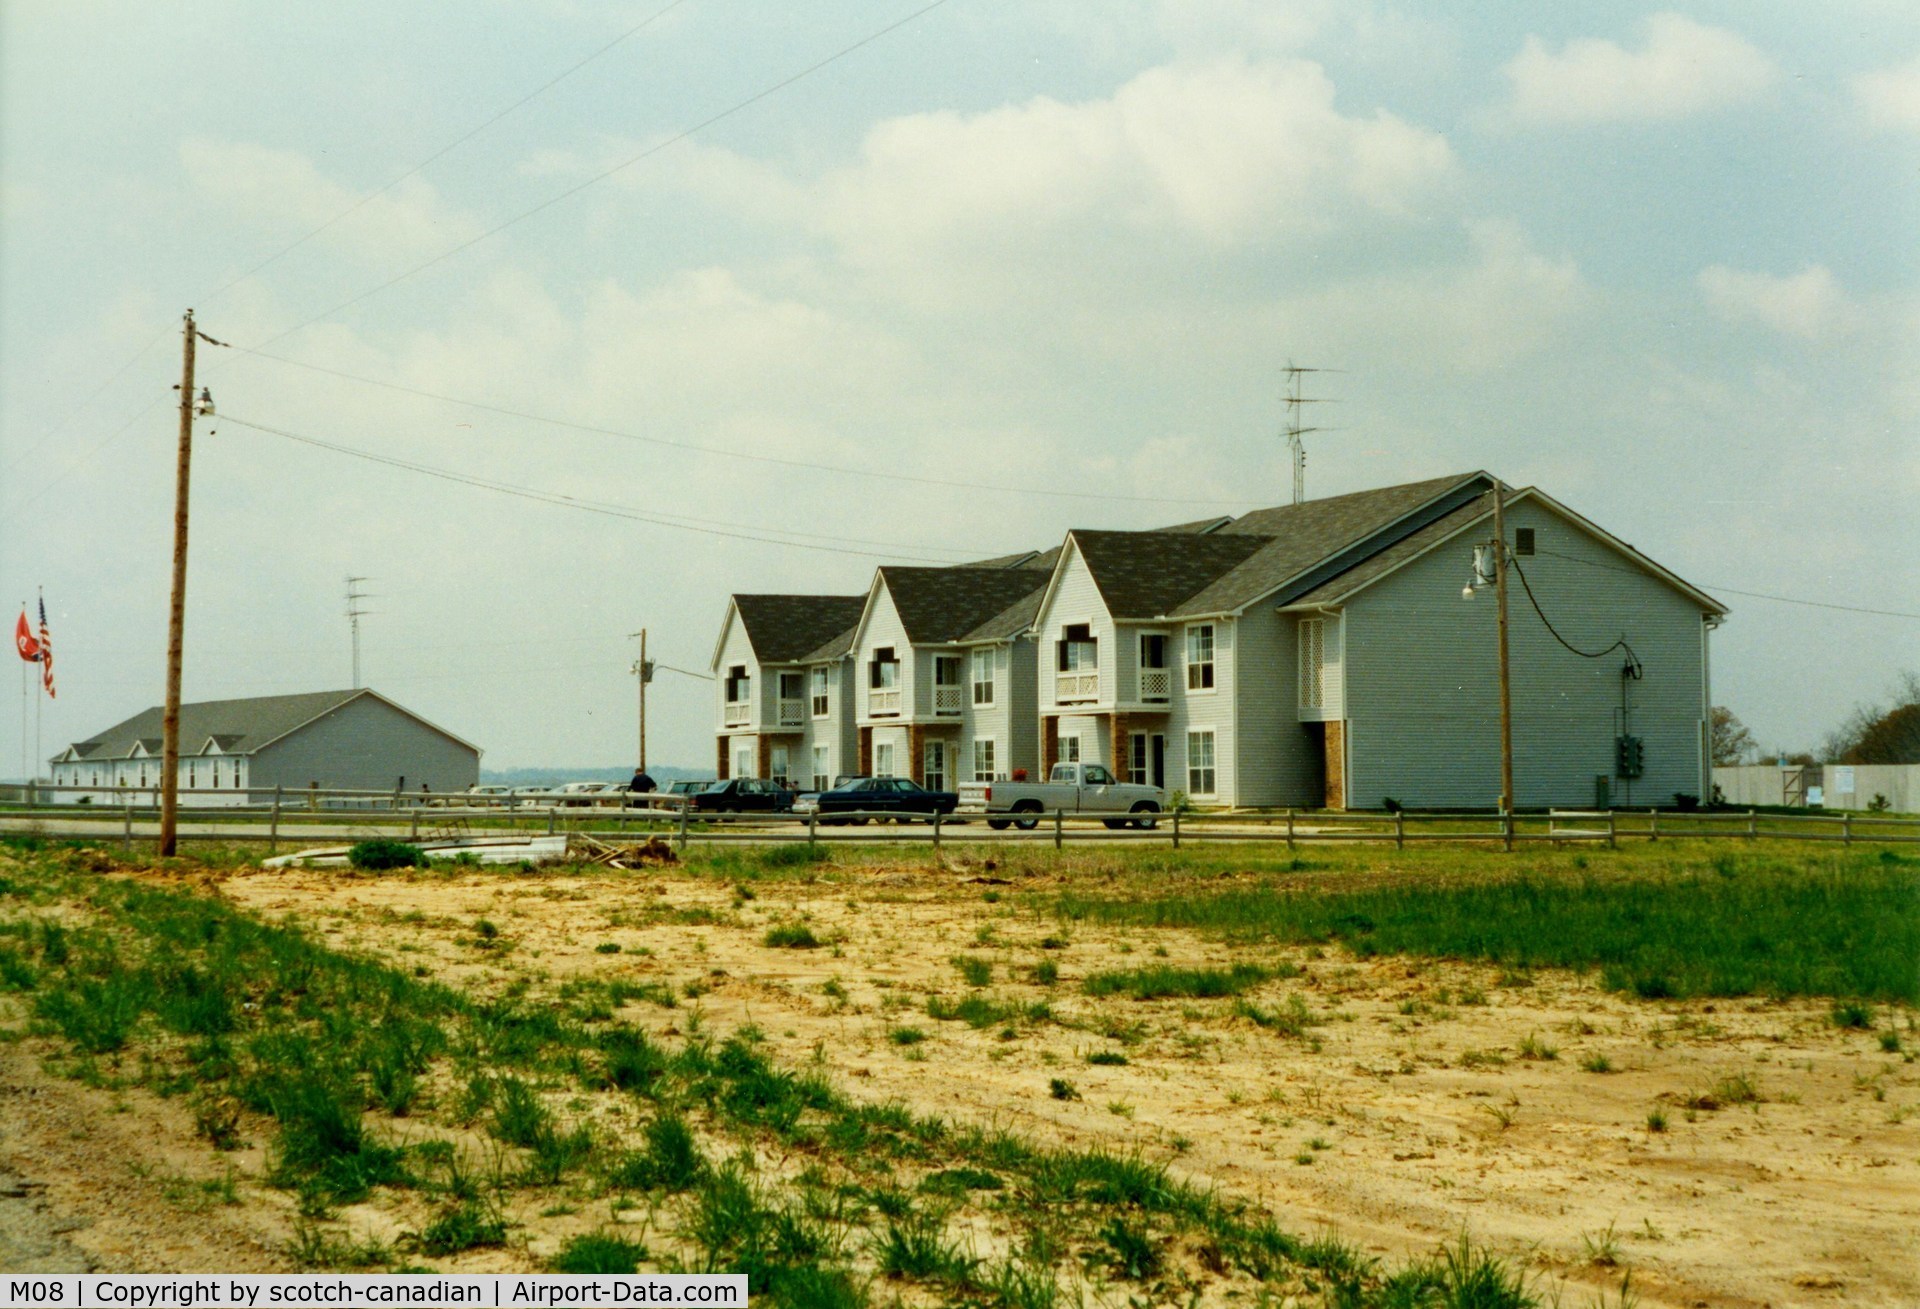 William L. Whitehurst Field Airport (M08) - Student Housing at Bolivar International School of Aeronautics, William L. Whitehurst Field, Bolivar, TN - April 1989